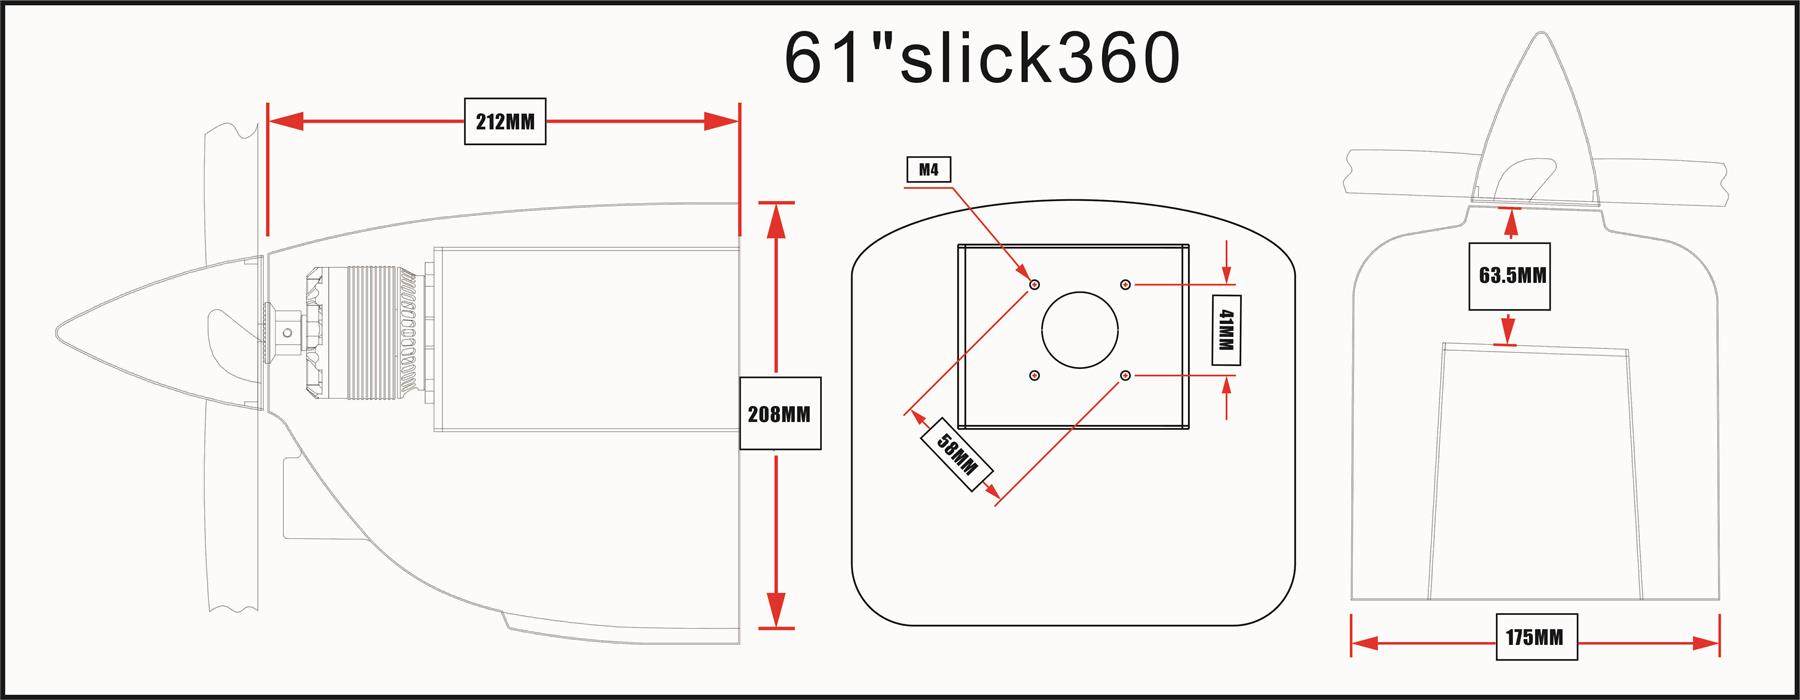 SLICK 360 - 61 V2 - weiß/grün/blau - C